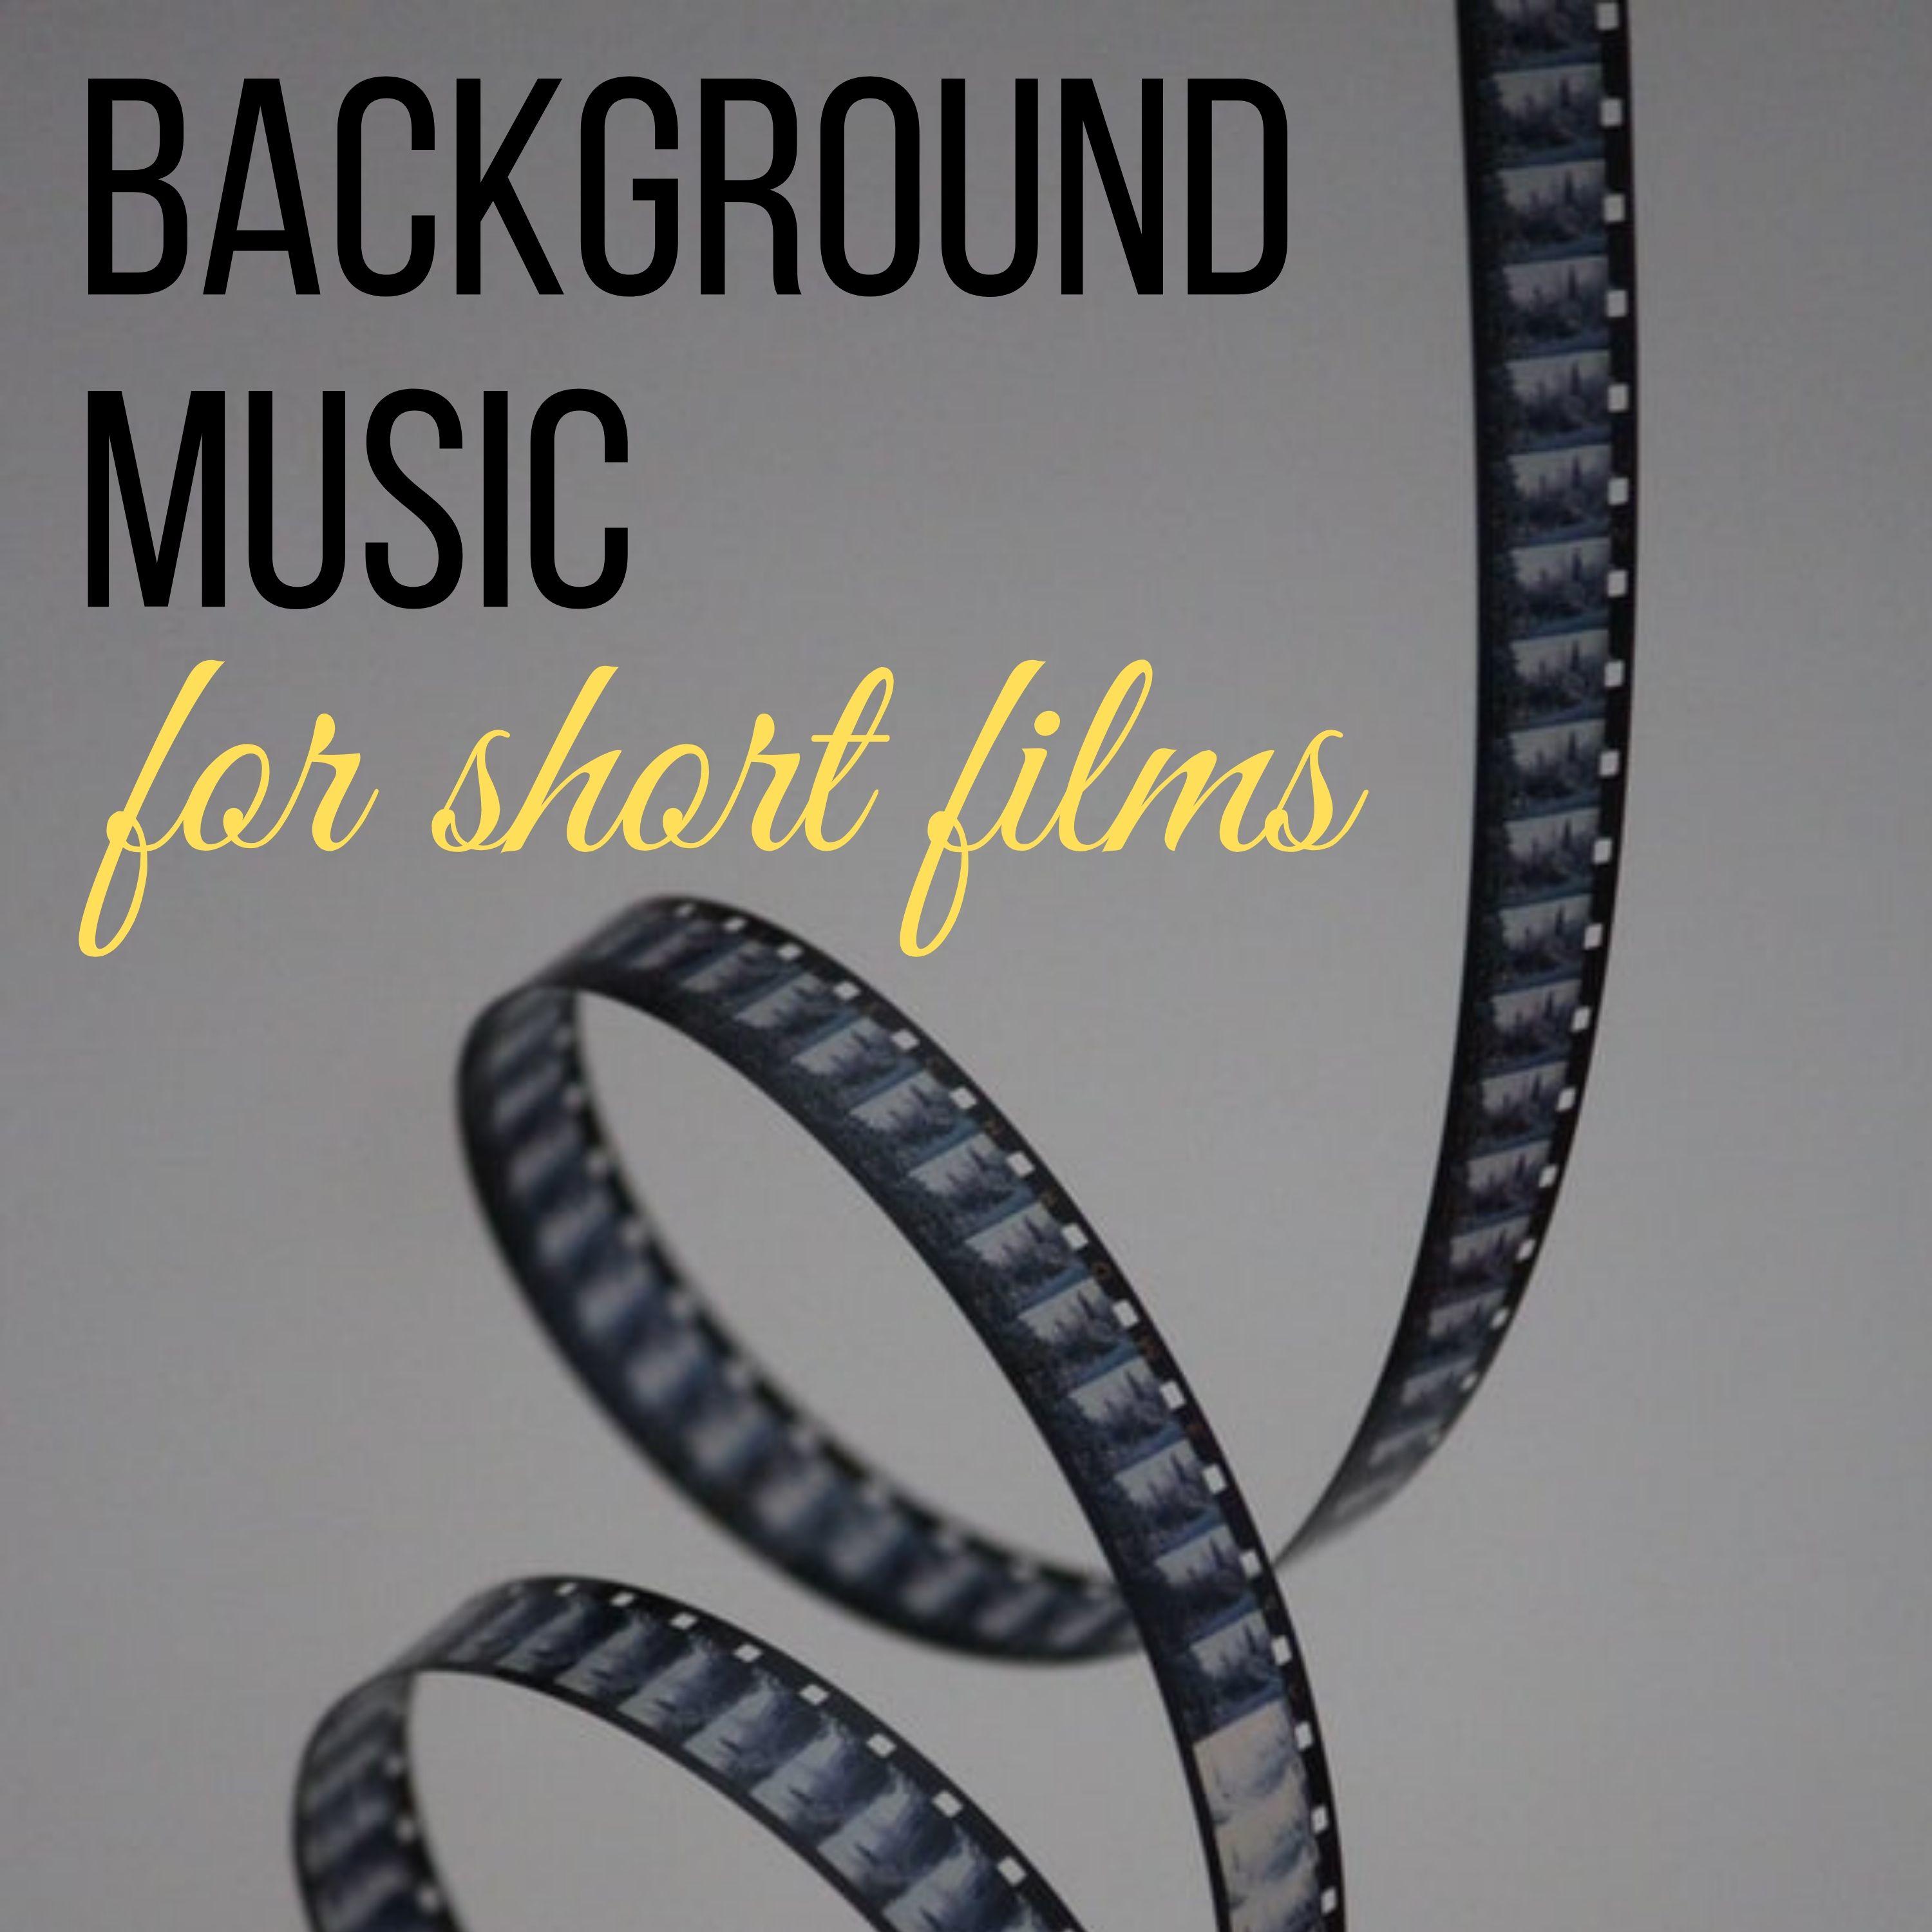 Background Music for Short Films